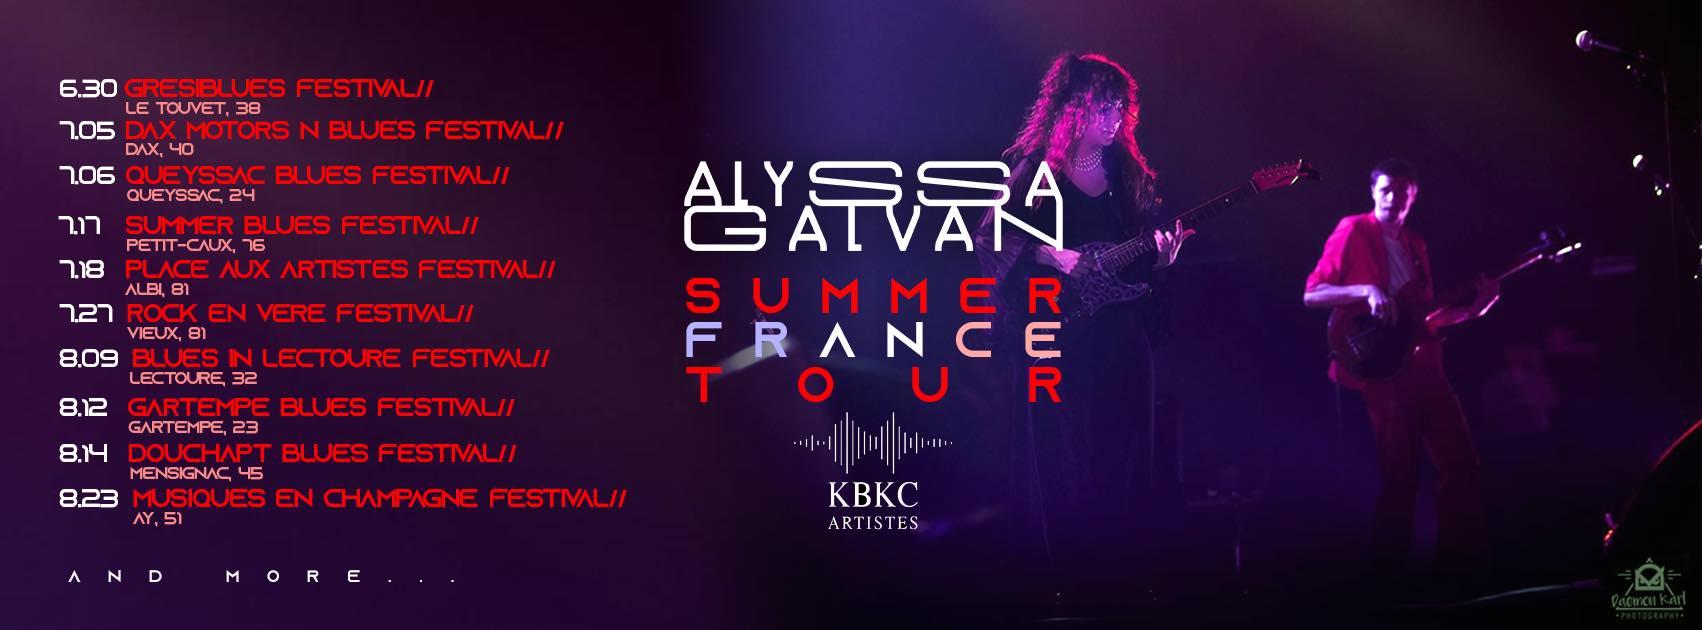 Alyssa galvan summer tour